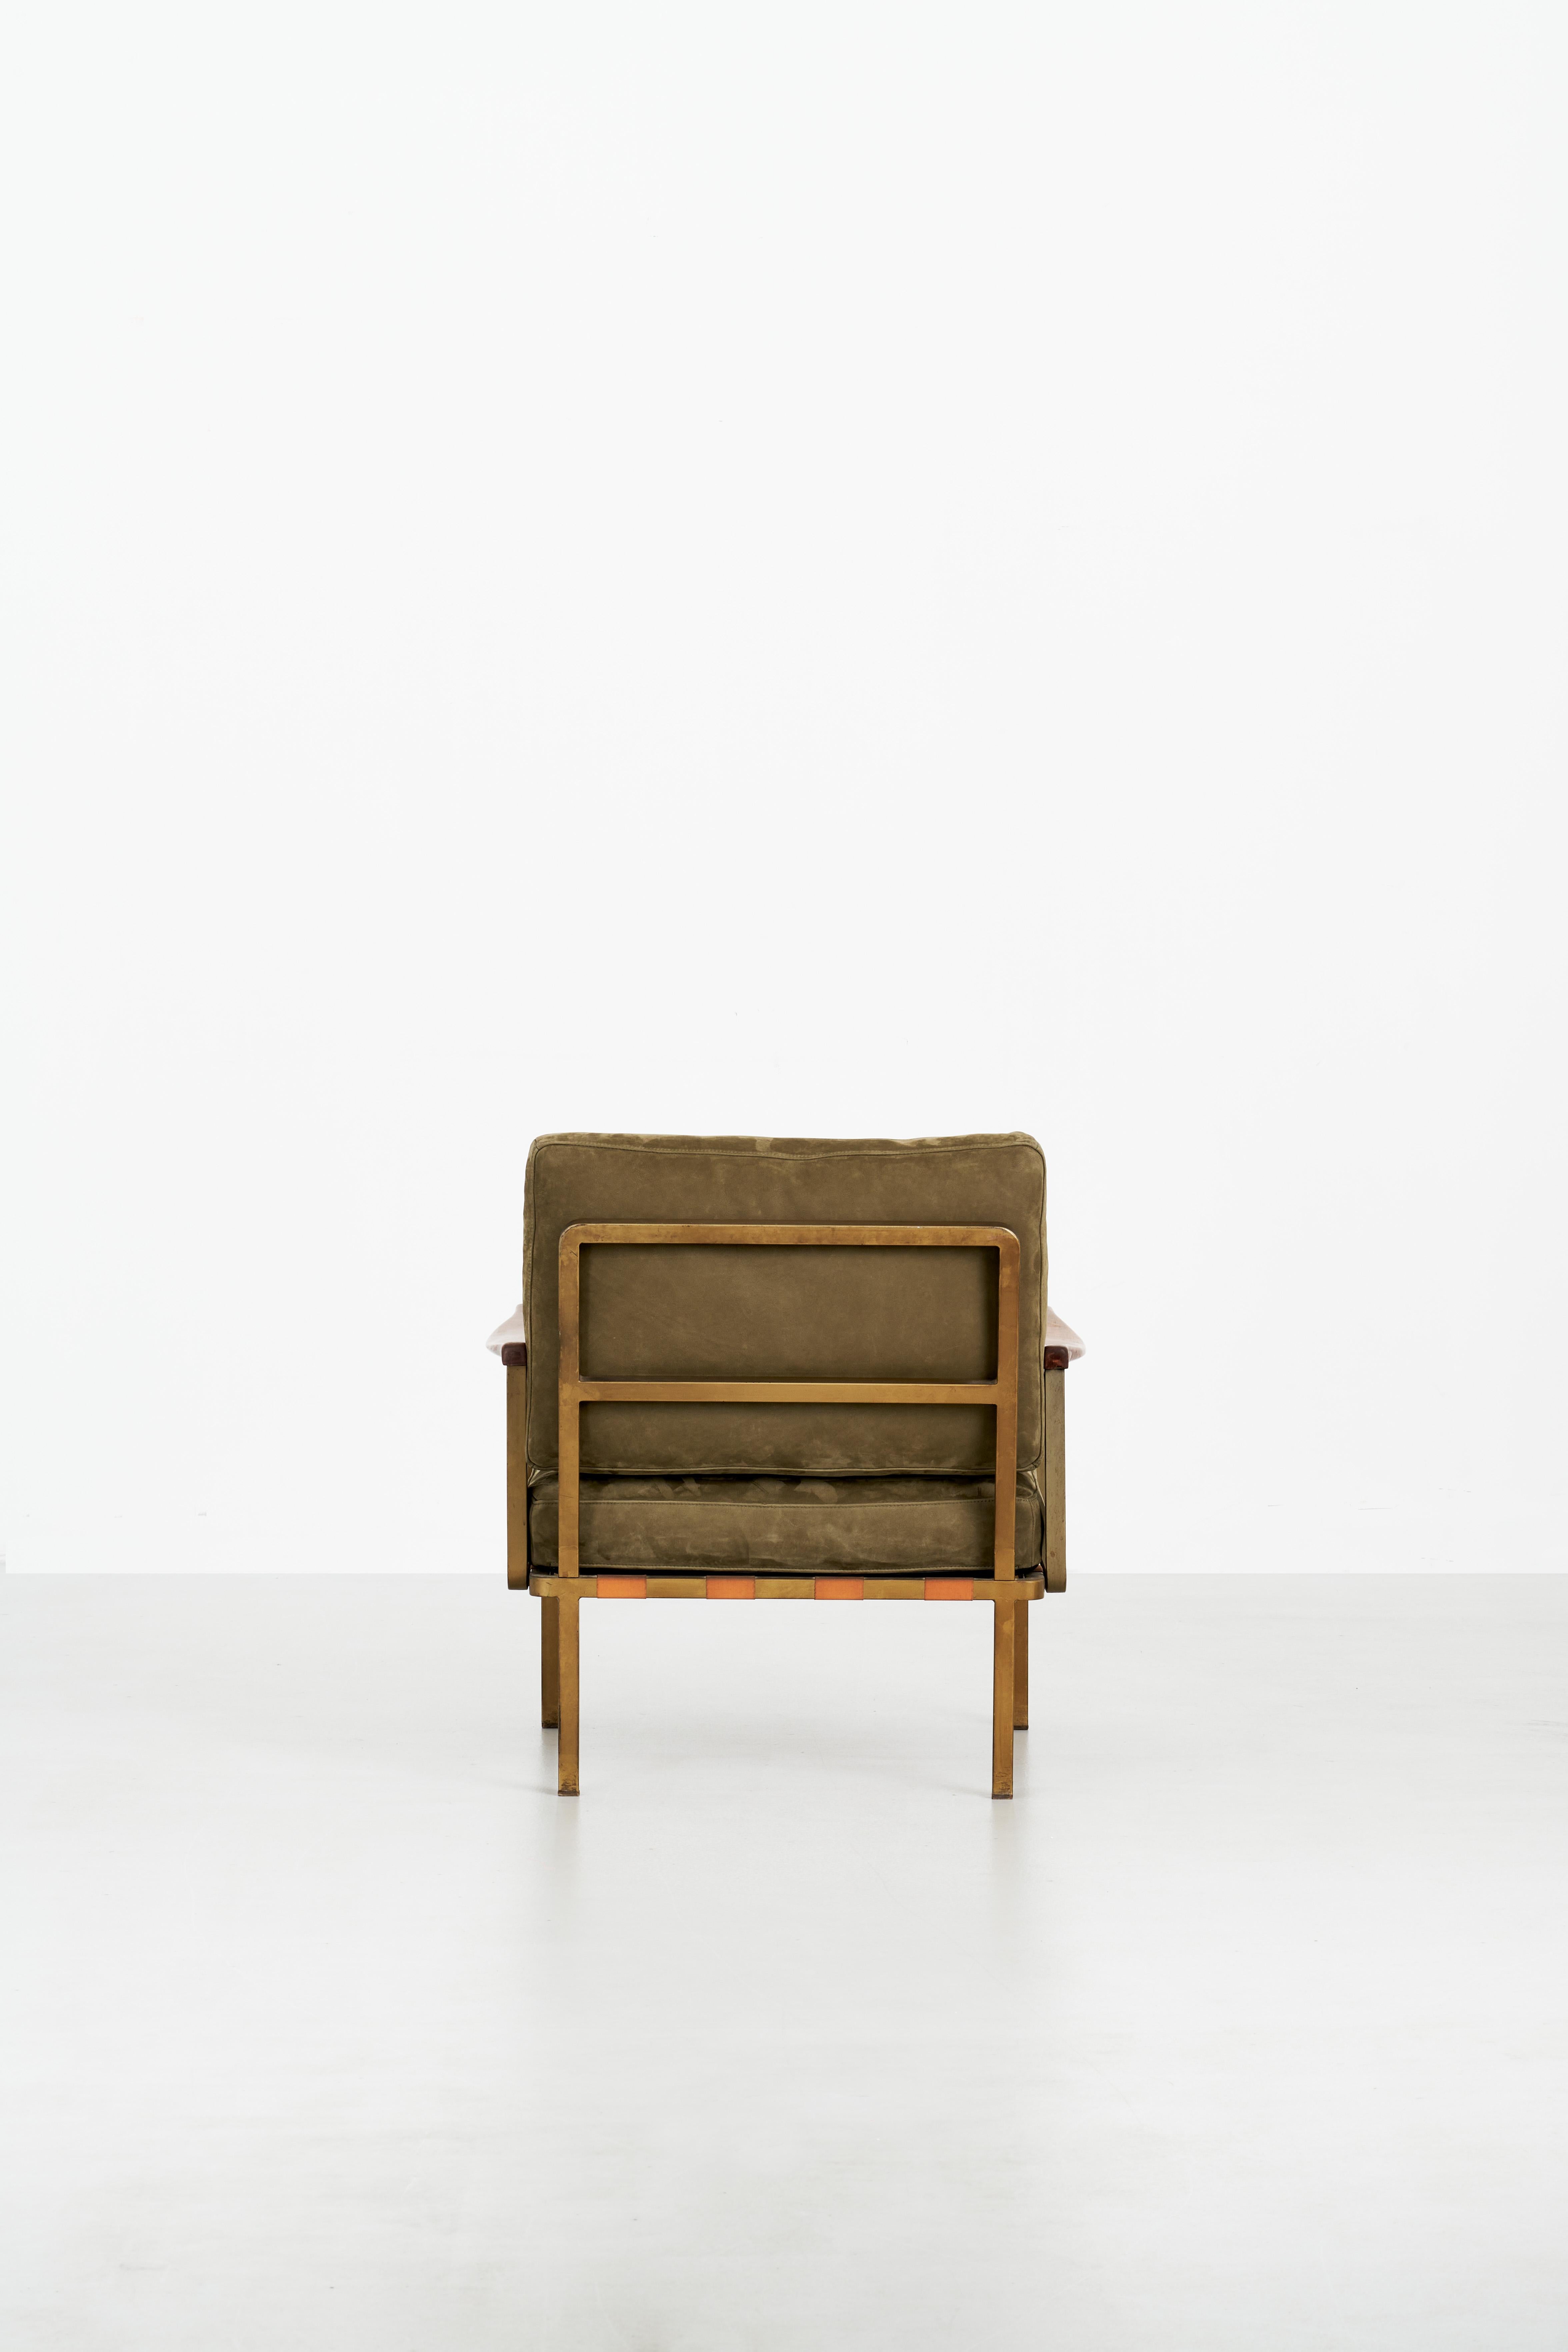 1961 Osvaldo Borsani-Armchairs with armrests mod. P24 green upholstery For Sale 3